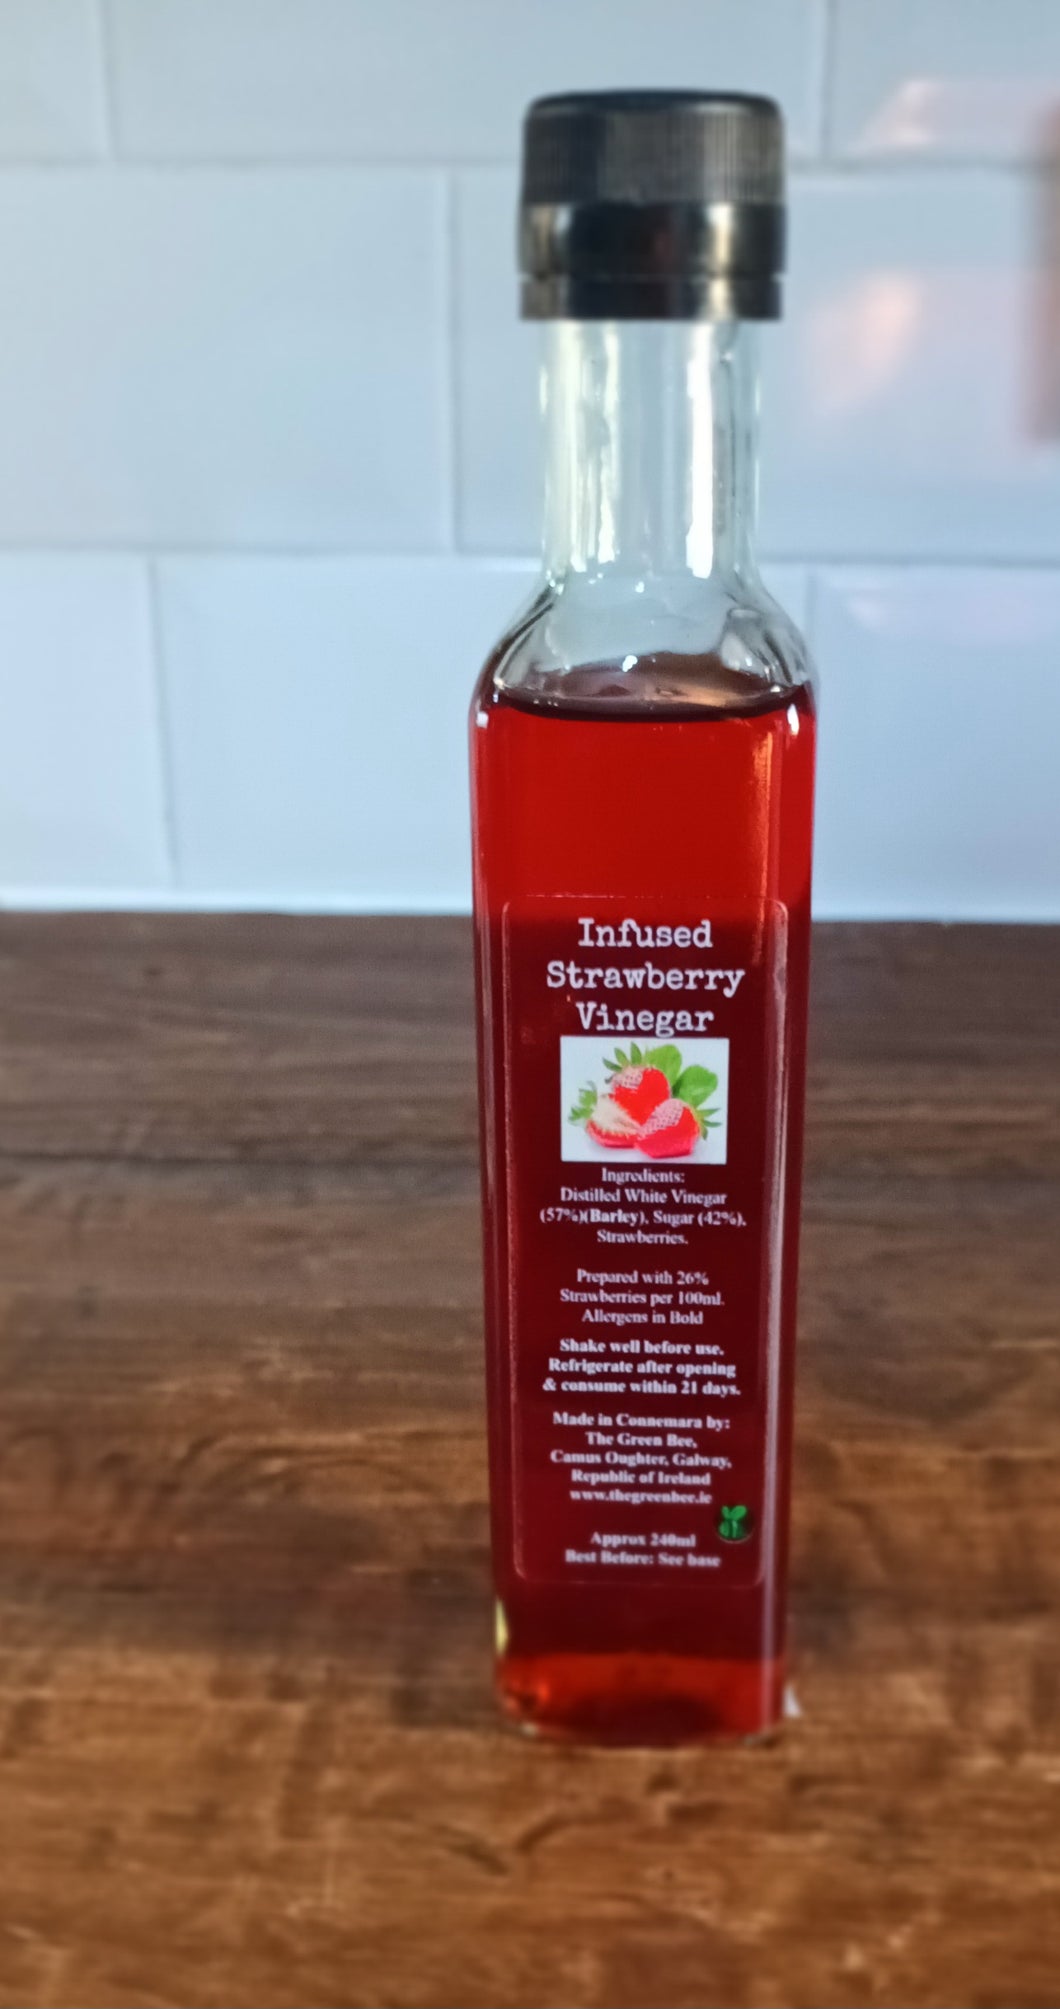 Infused strawberry vinegar